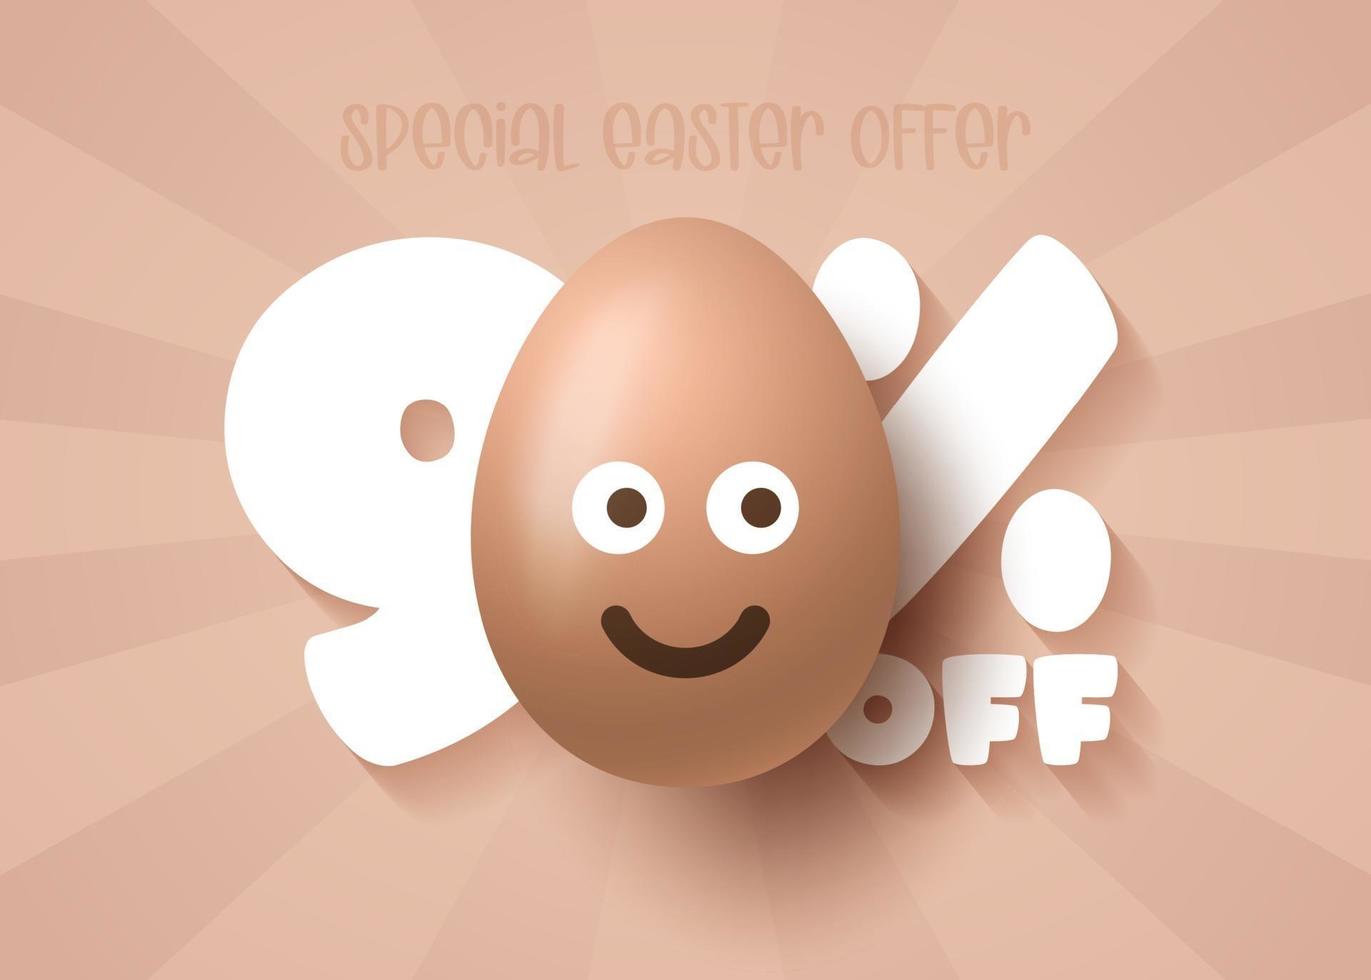 Happy Easter Sale banner. Easter Sale 90 off banner template with smile emoji brown Easter Eggs. Vector illustration